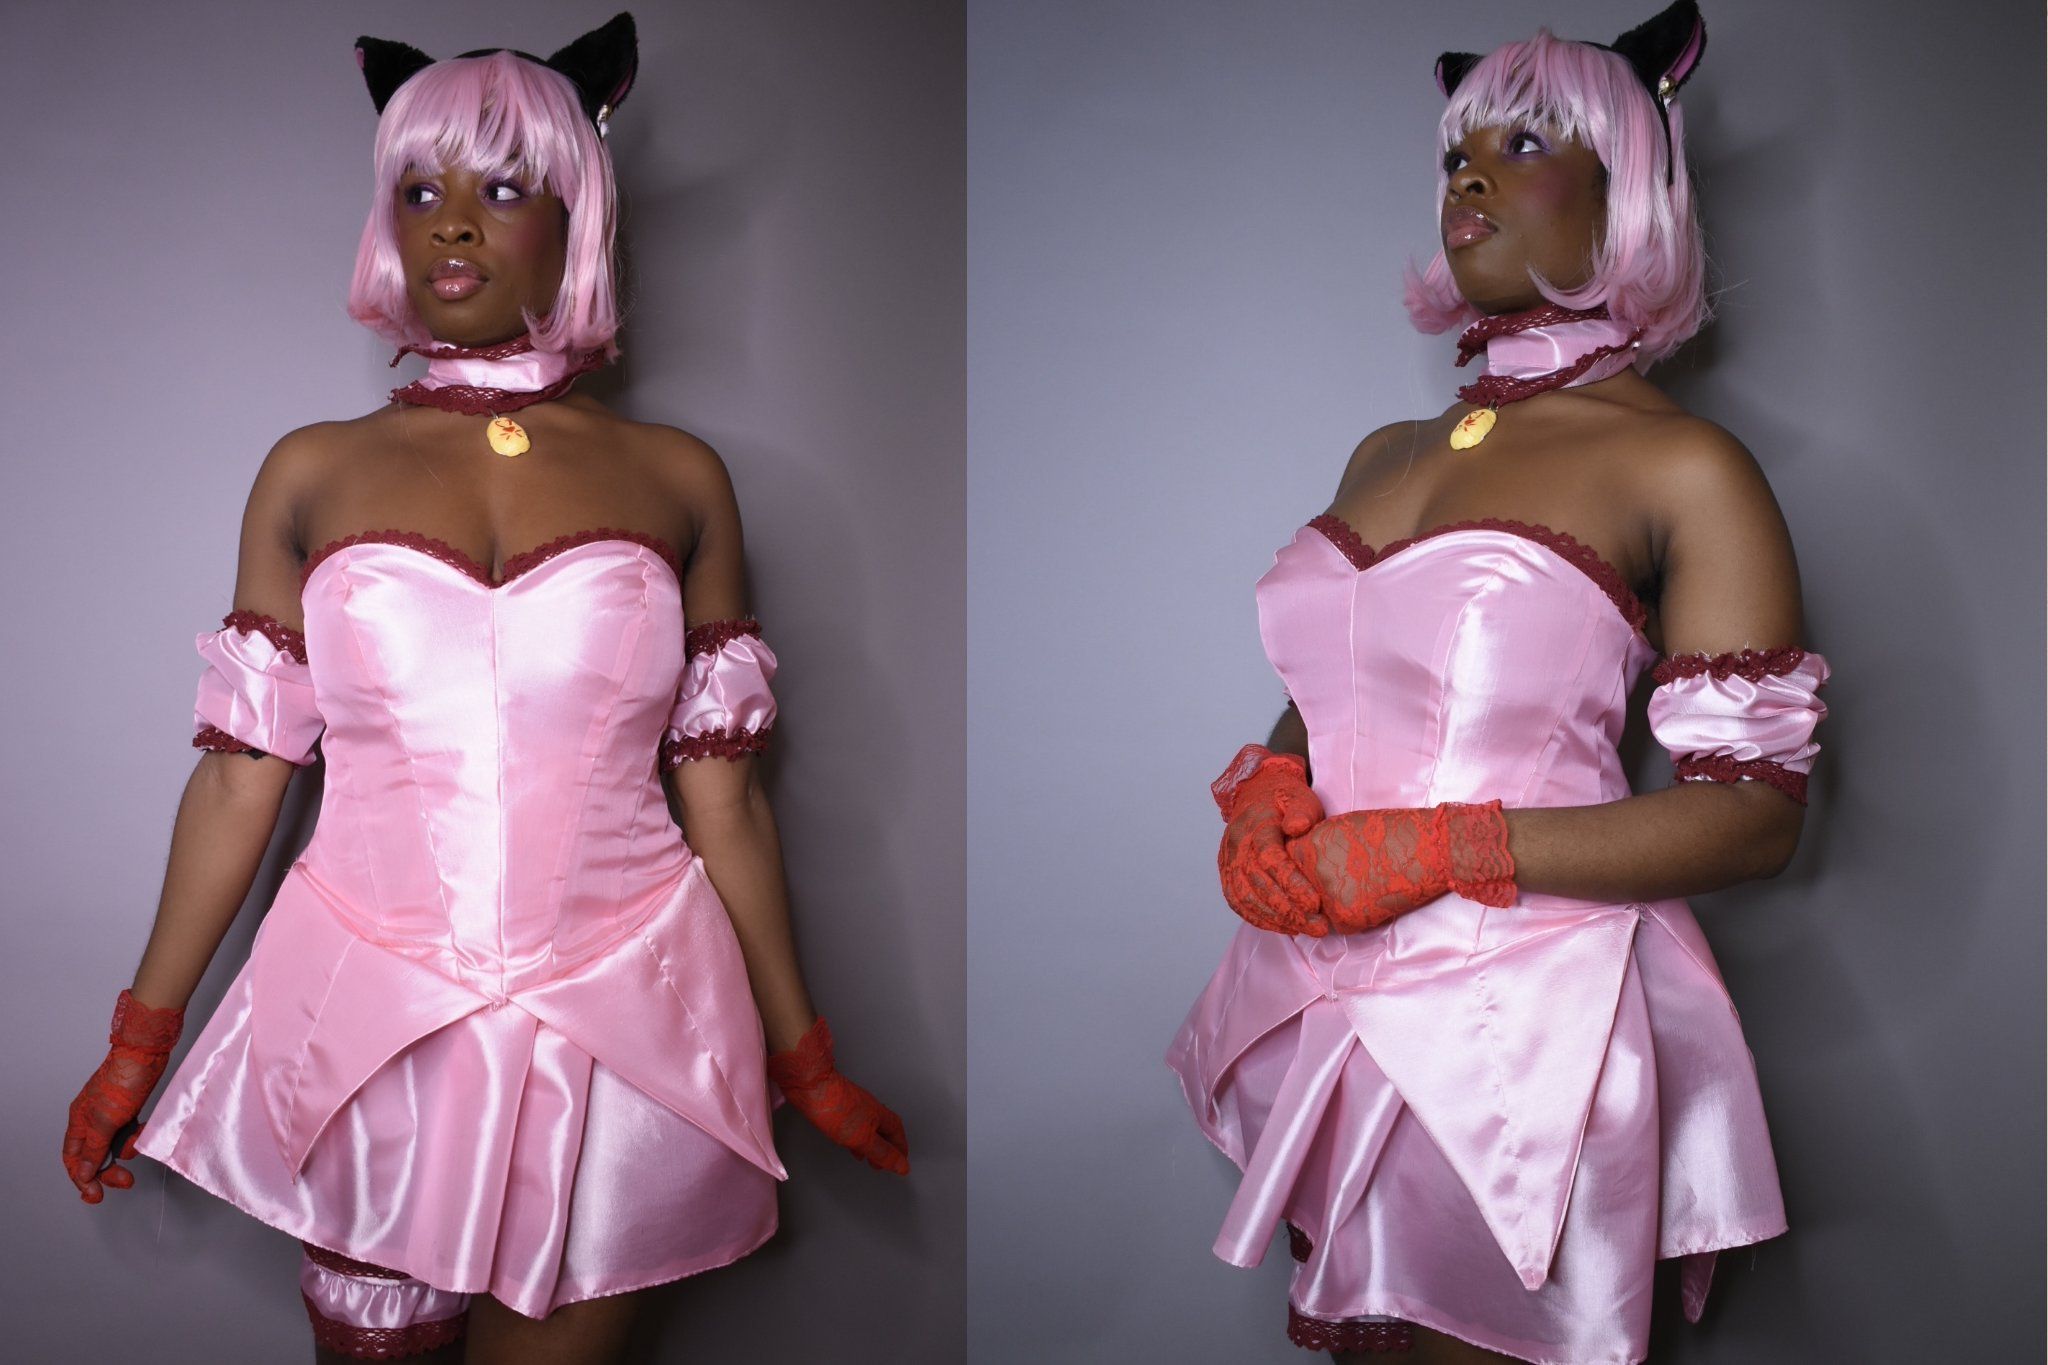 bradley esteban add cat girl cosplay photo